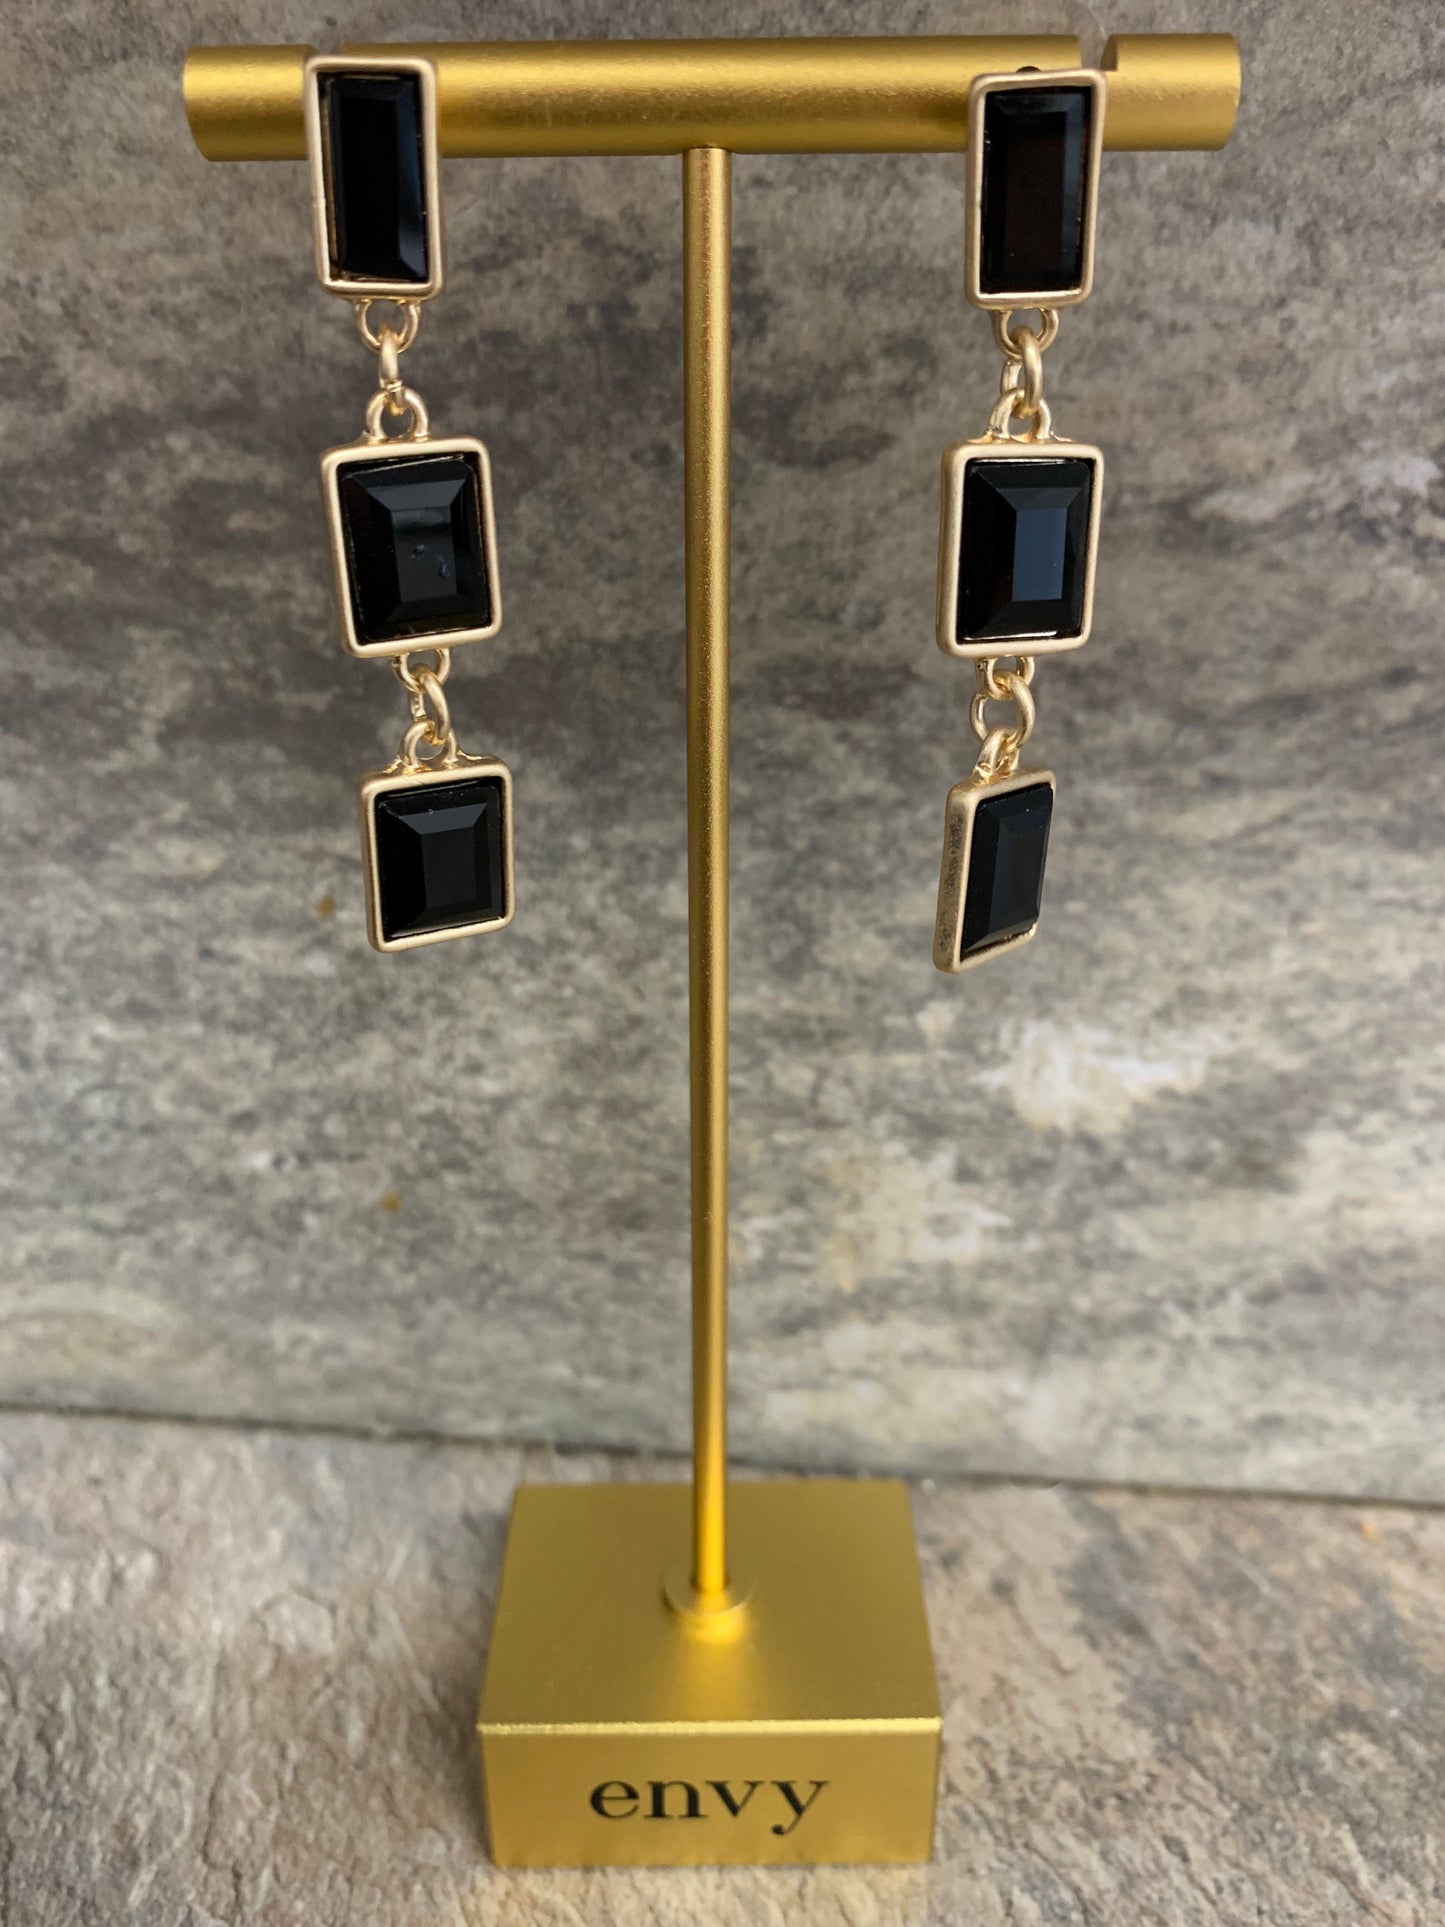 Envy Gold and black drop earrings